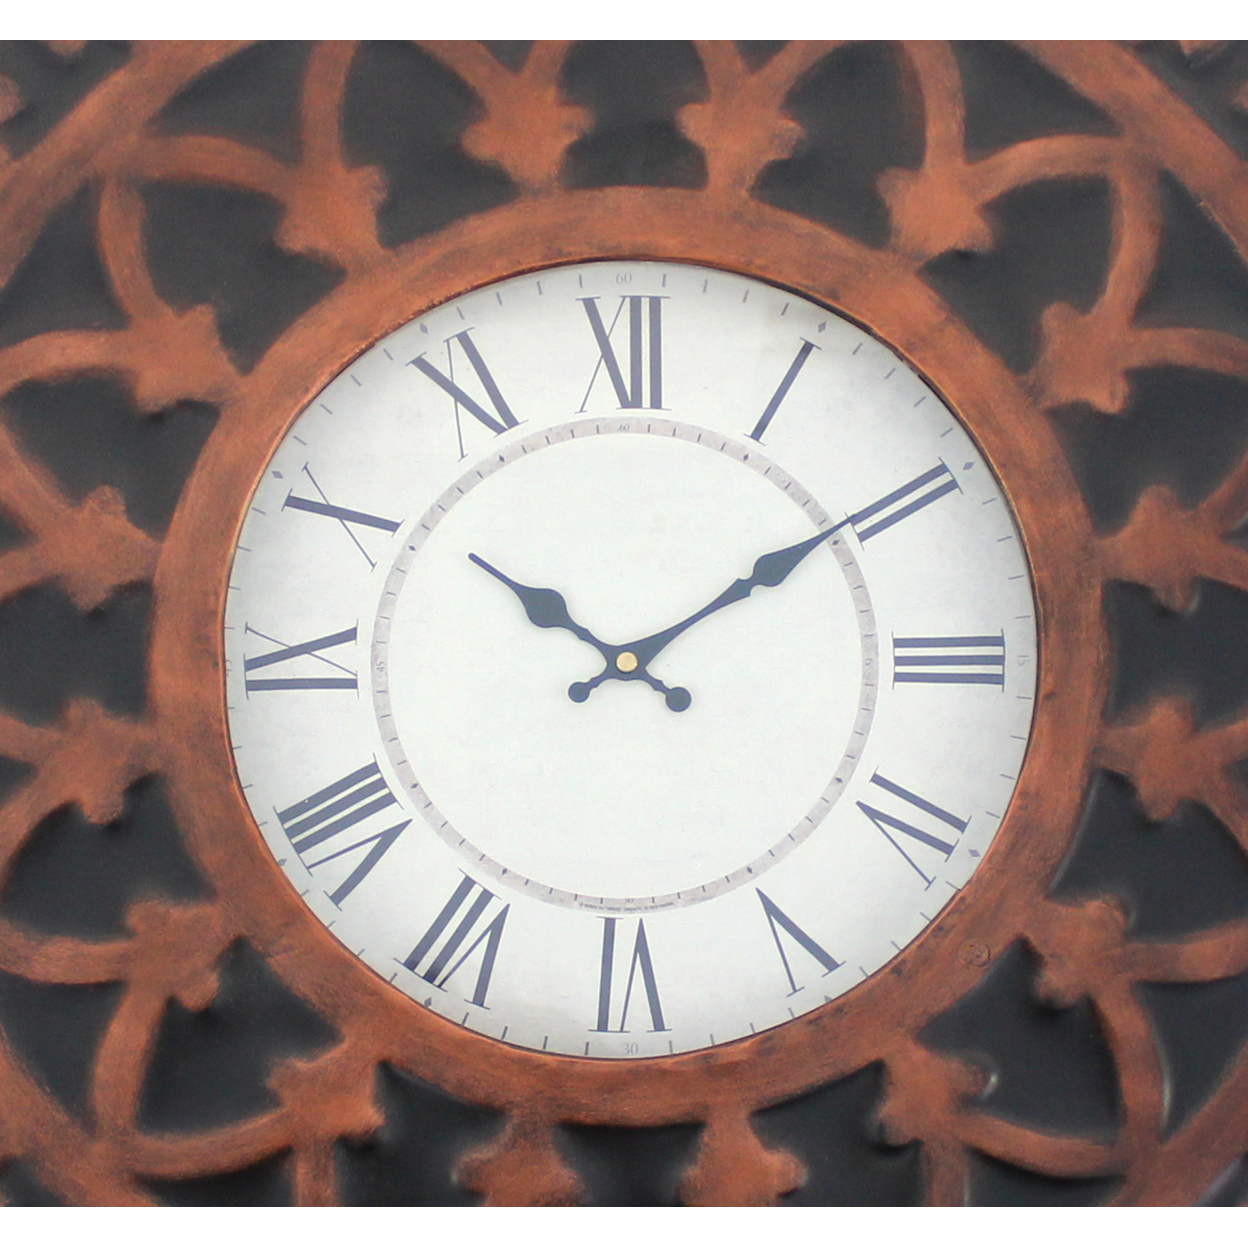 Baroque Design Metal Wall Clock With Roman Numerals, Brown And Black- Saltoro Sherpi